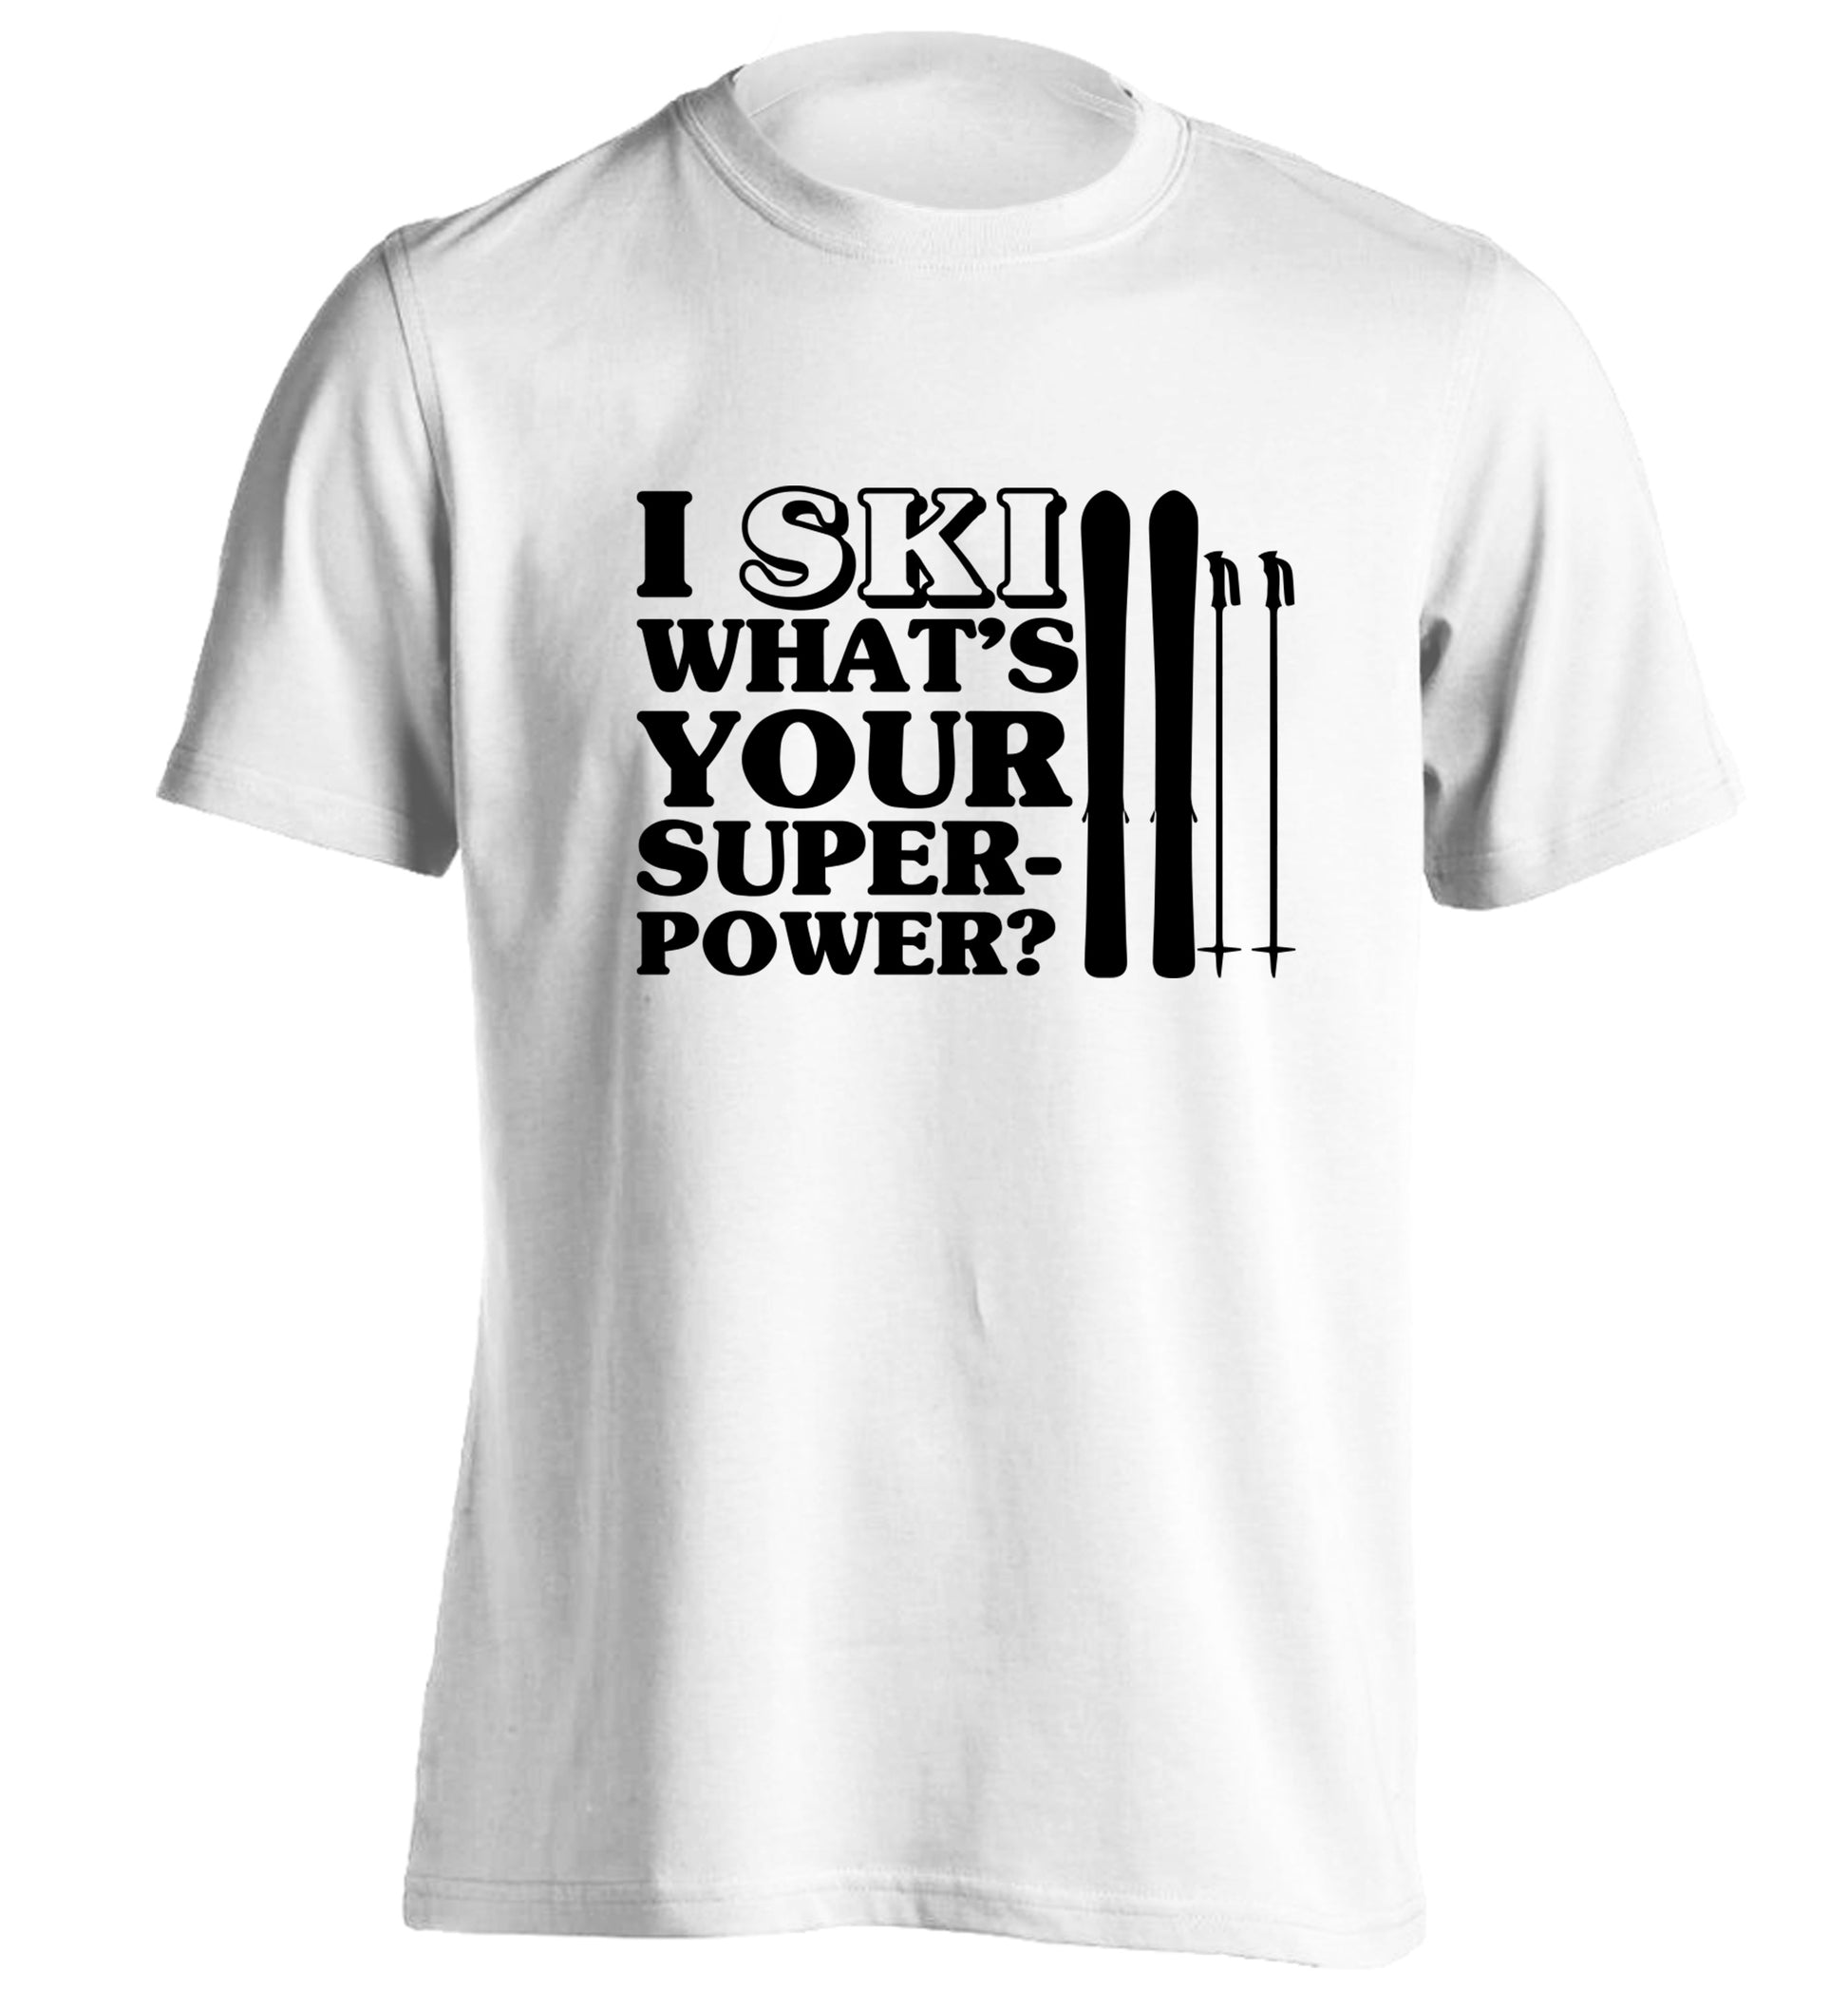 I ski what's your superpower? adults unisexwhite Tshirt 2XL